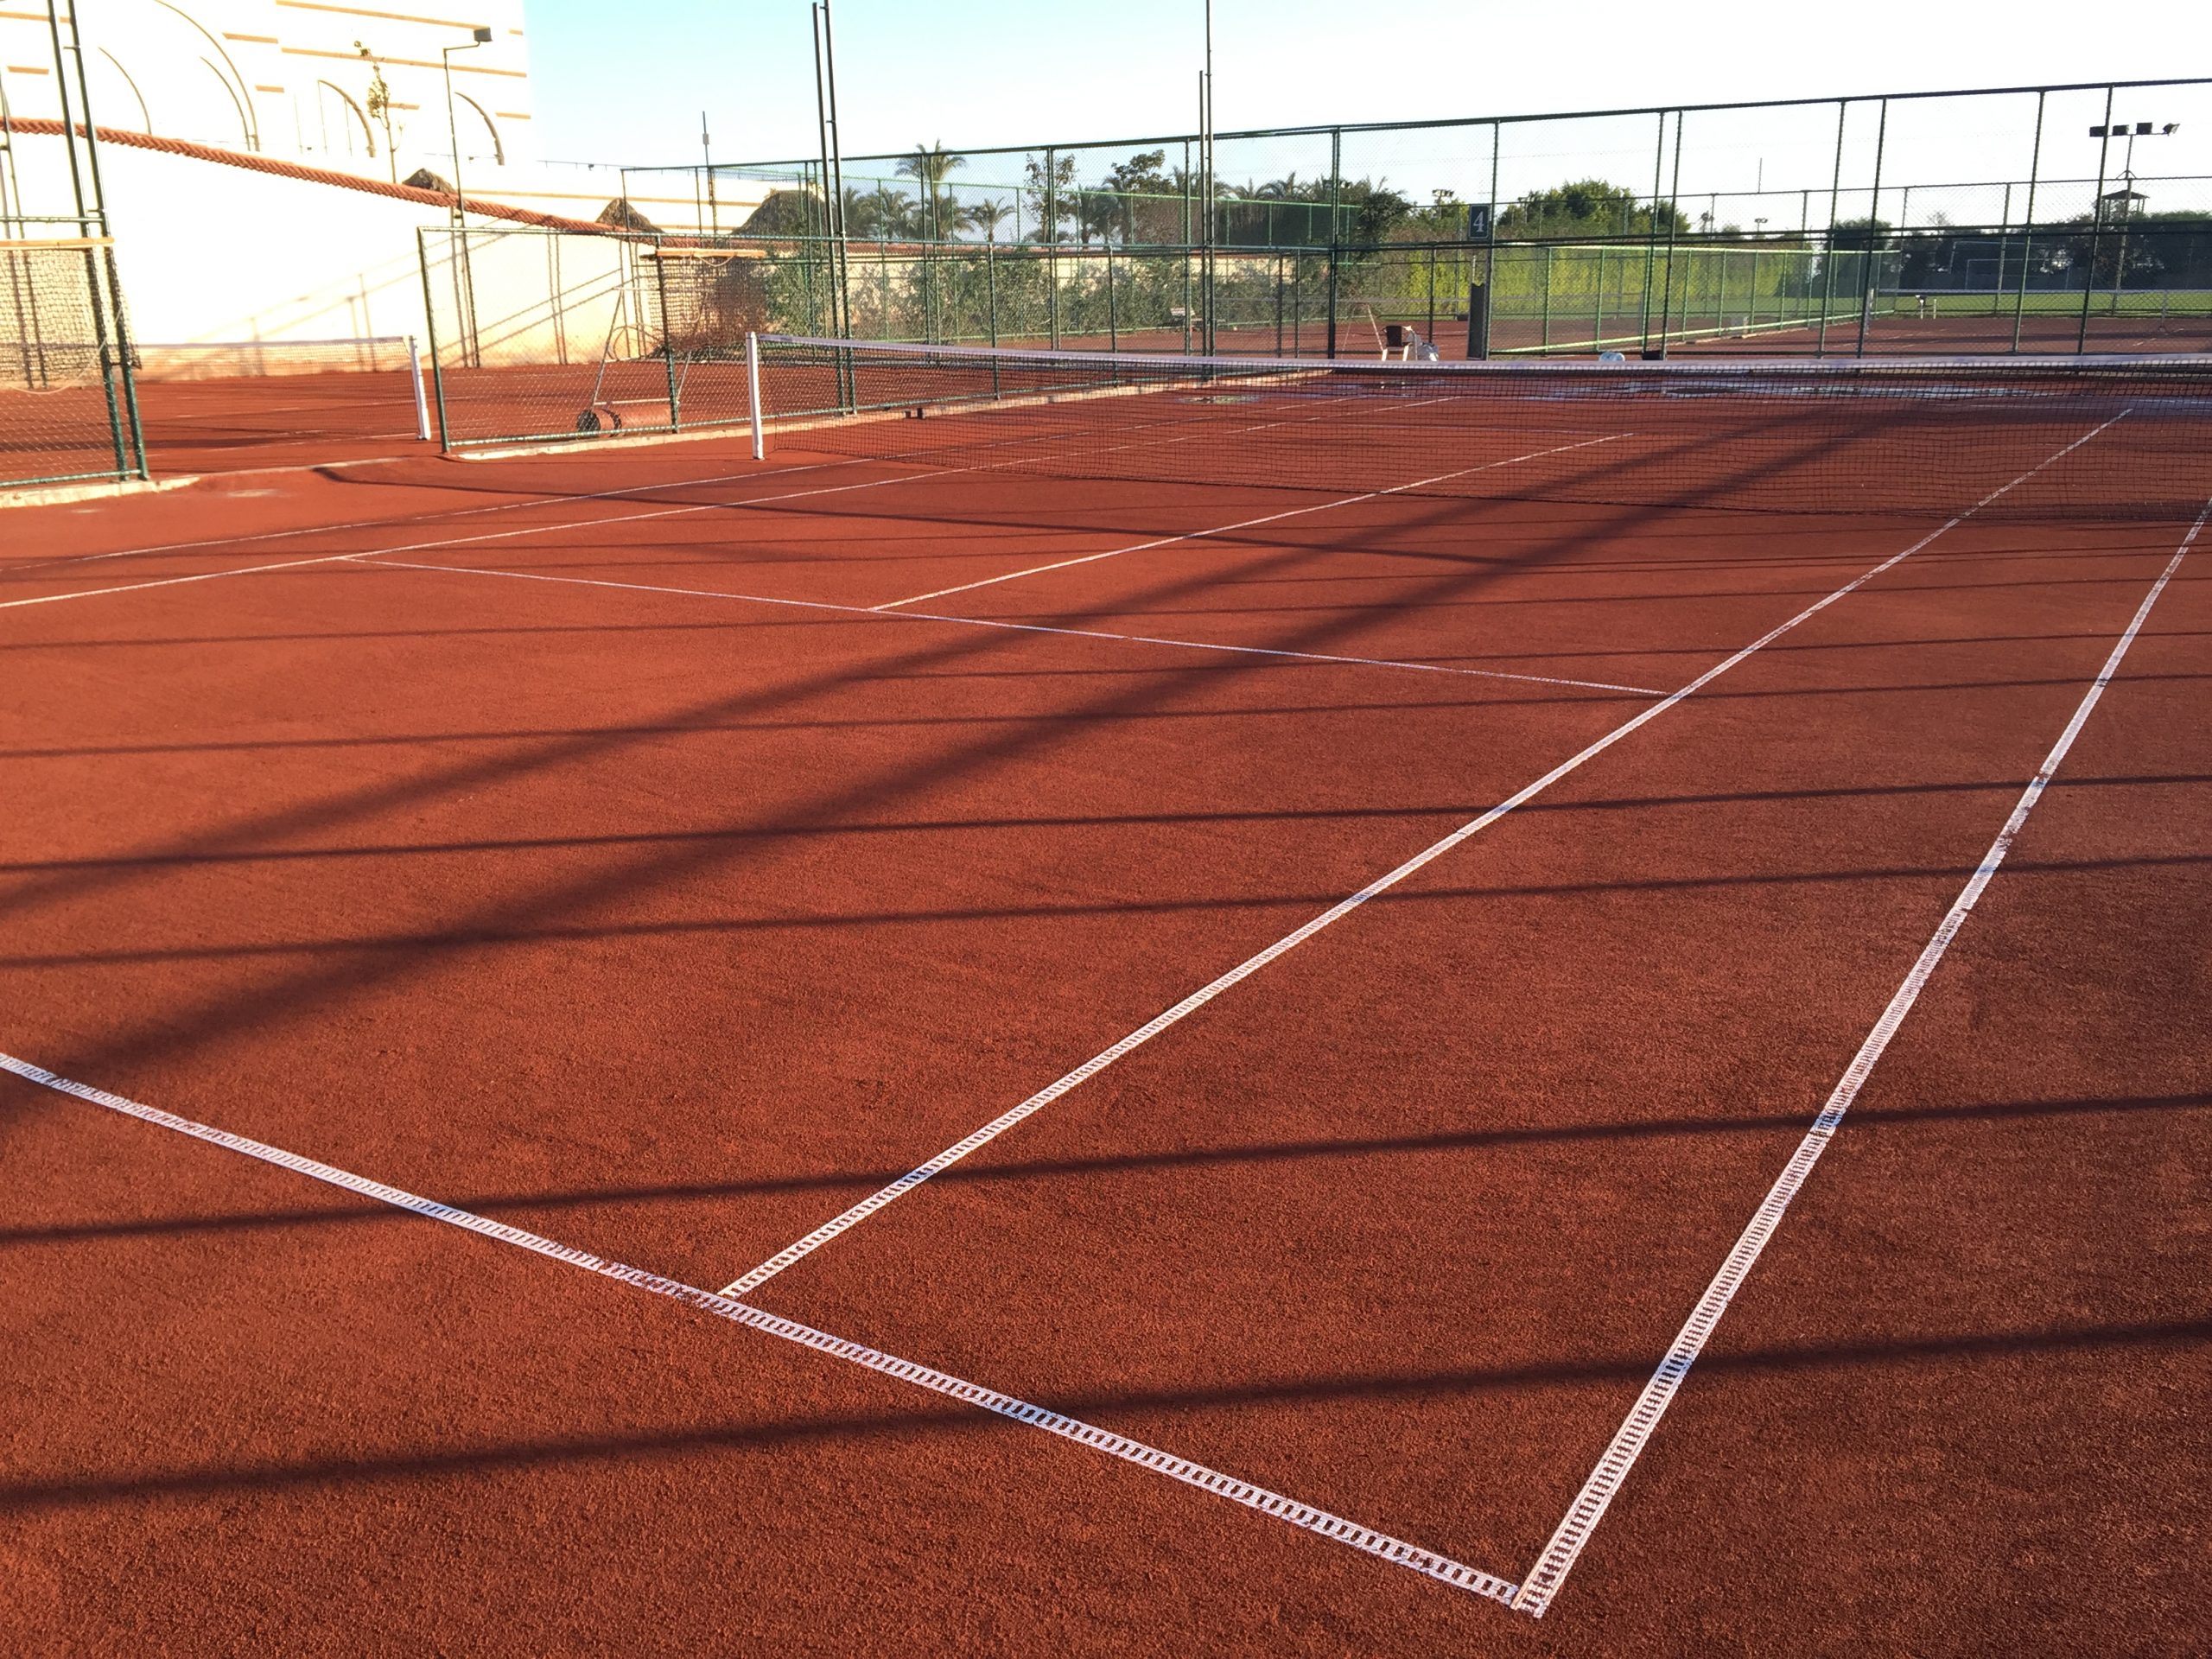 Toprak Tenis Kortu Yapımı